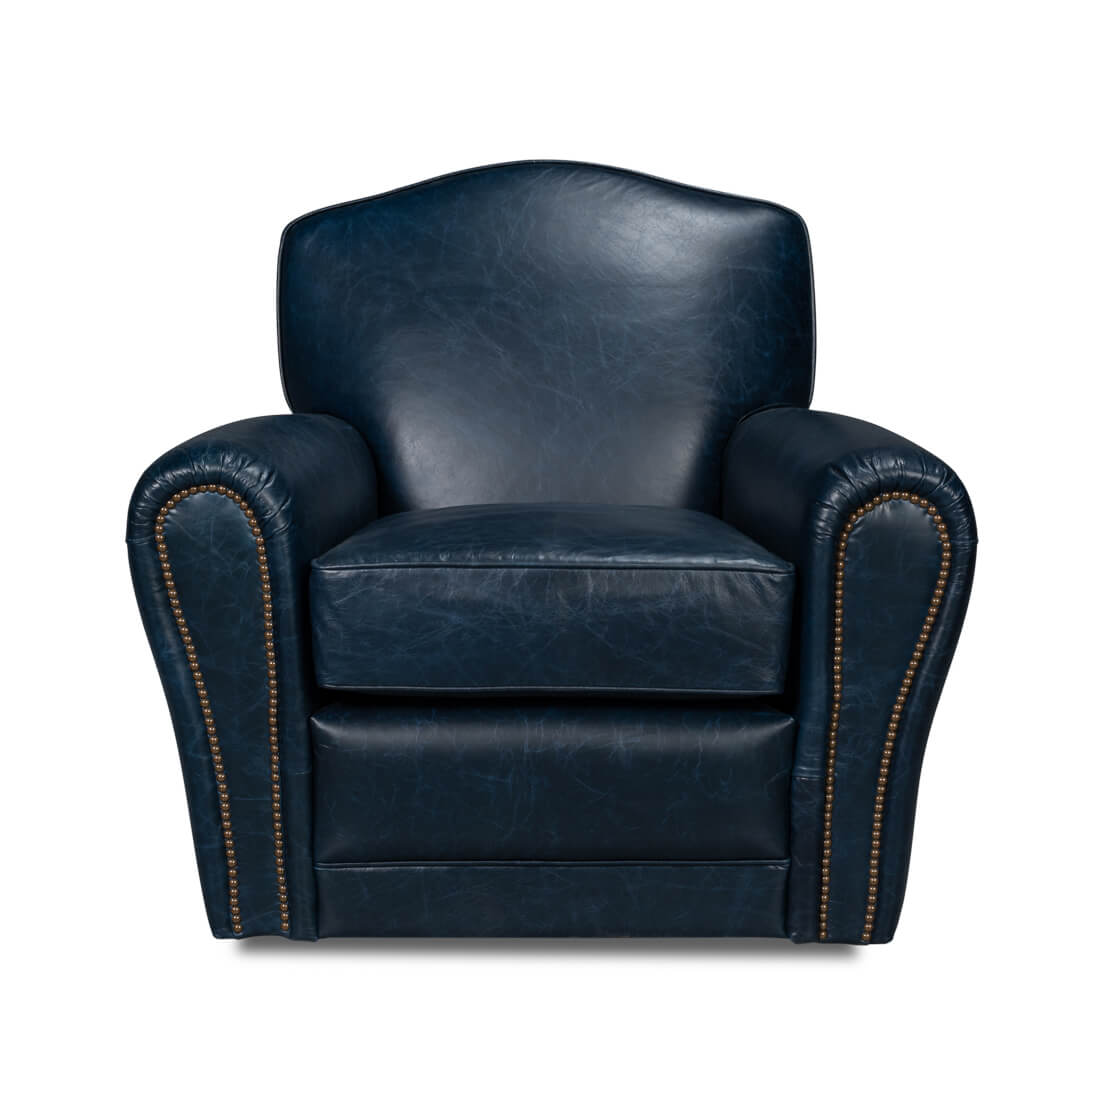 French Art Deco Style Blue Leather Club Chair - English Georgian America